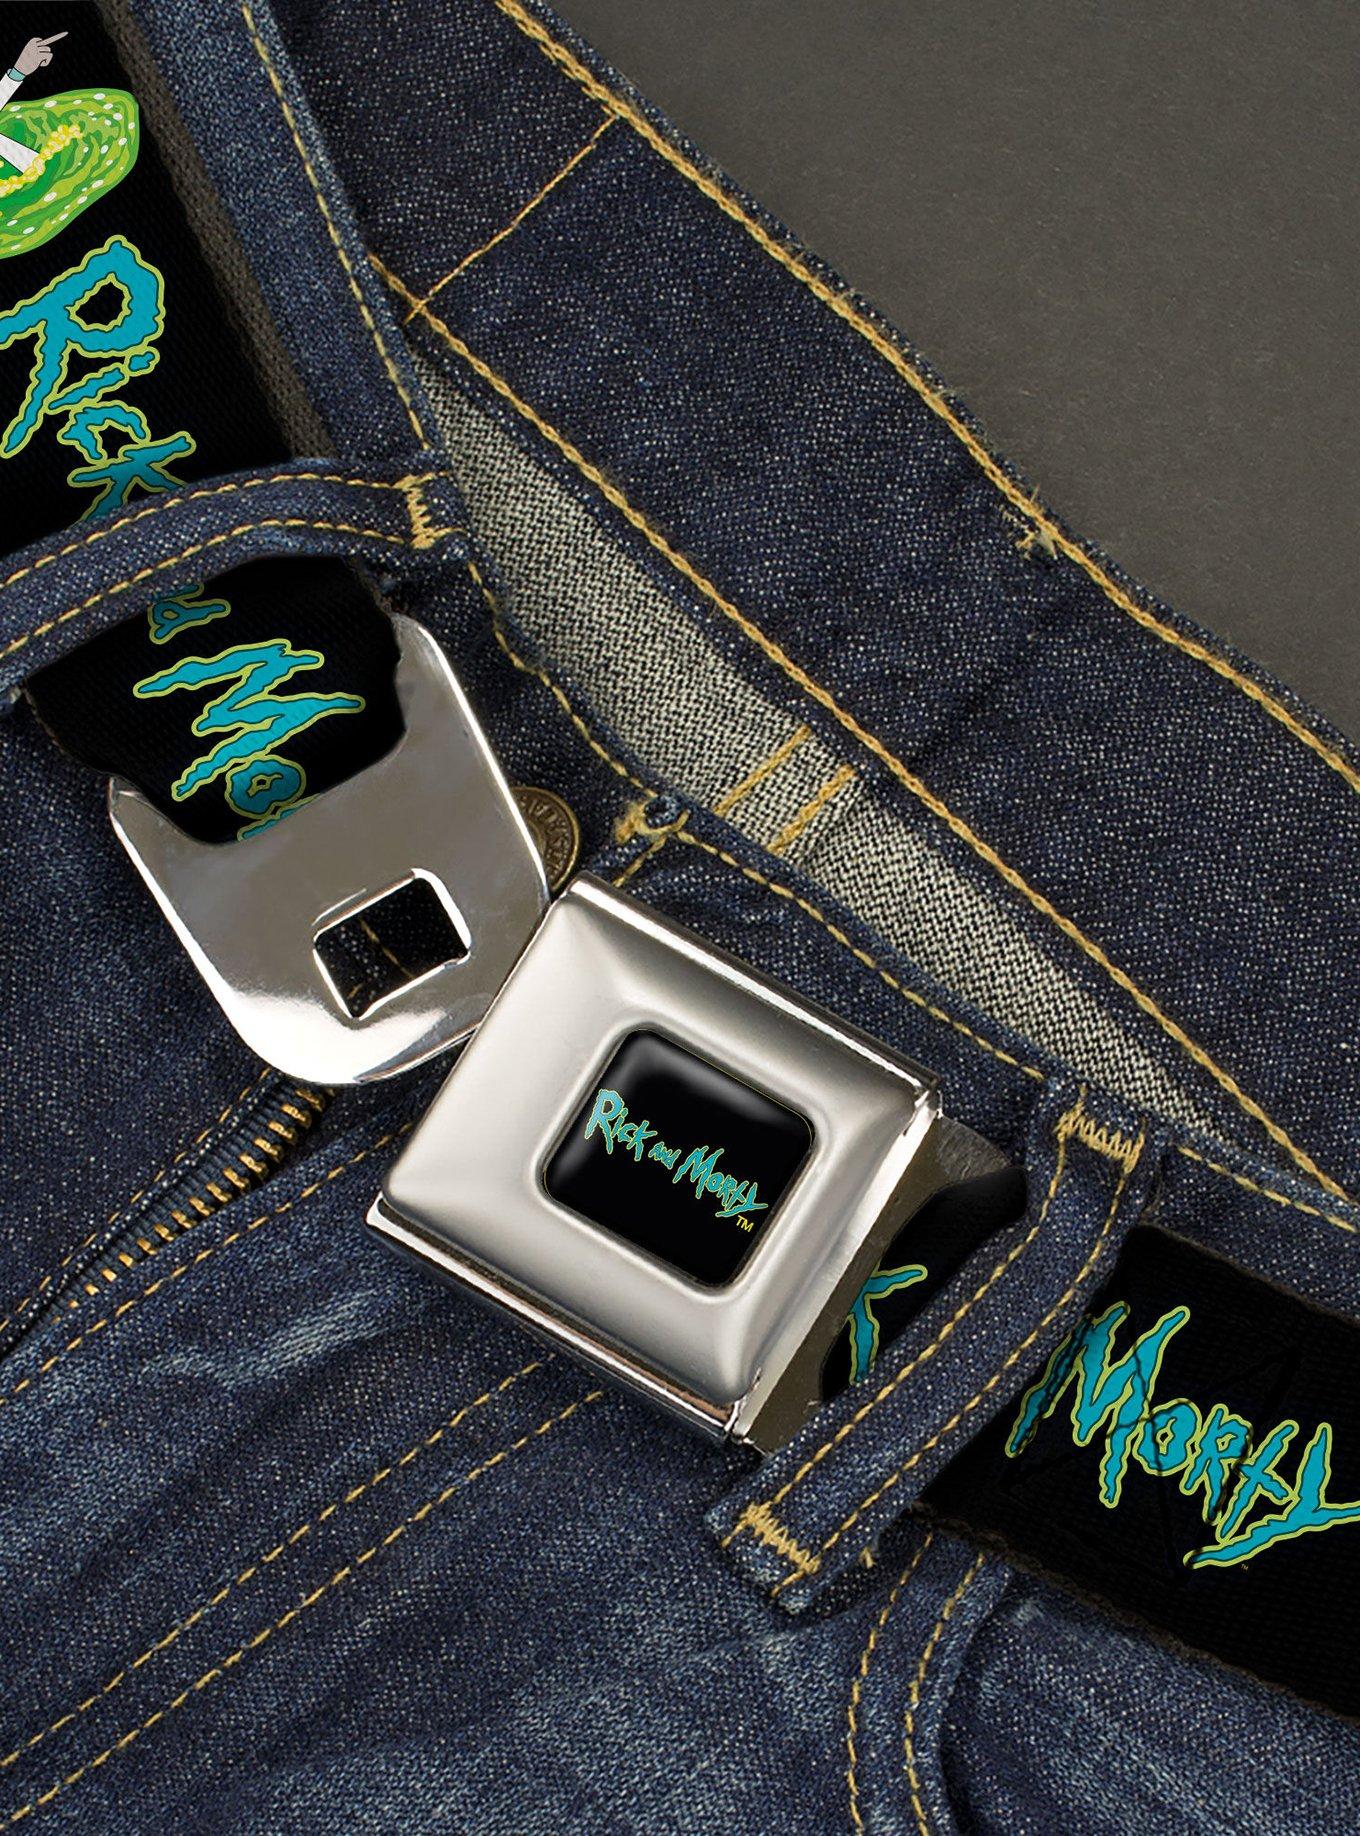 Rick And Morty Title Logo And Middle Finger Portal Jump Youth Seatbelt Belt, , hi-res